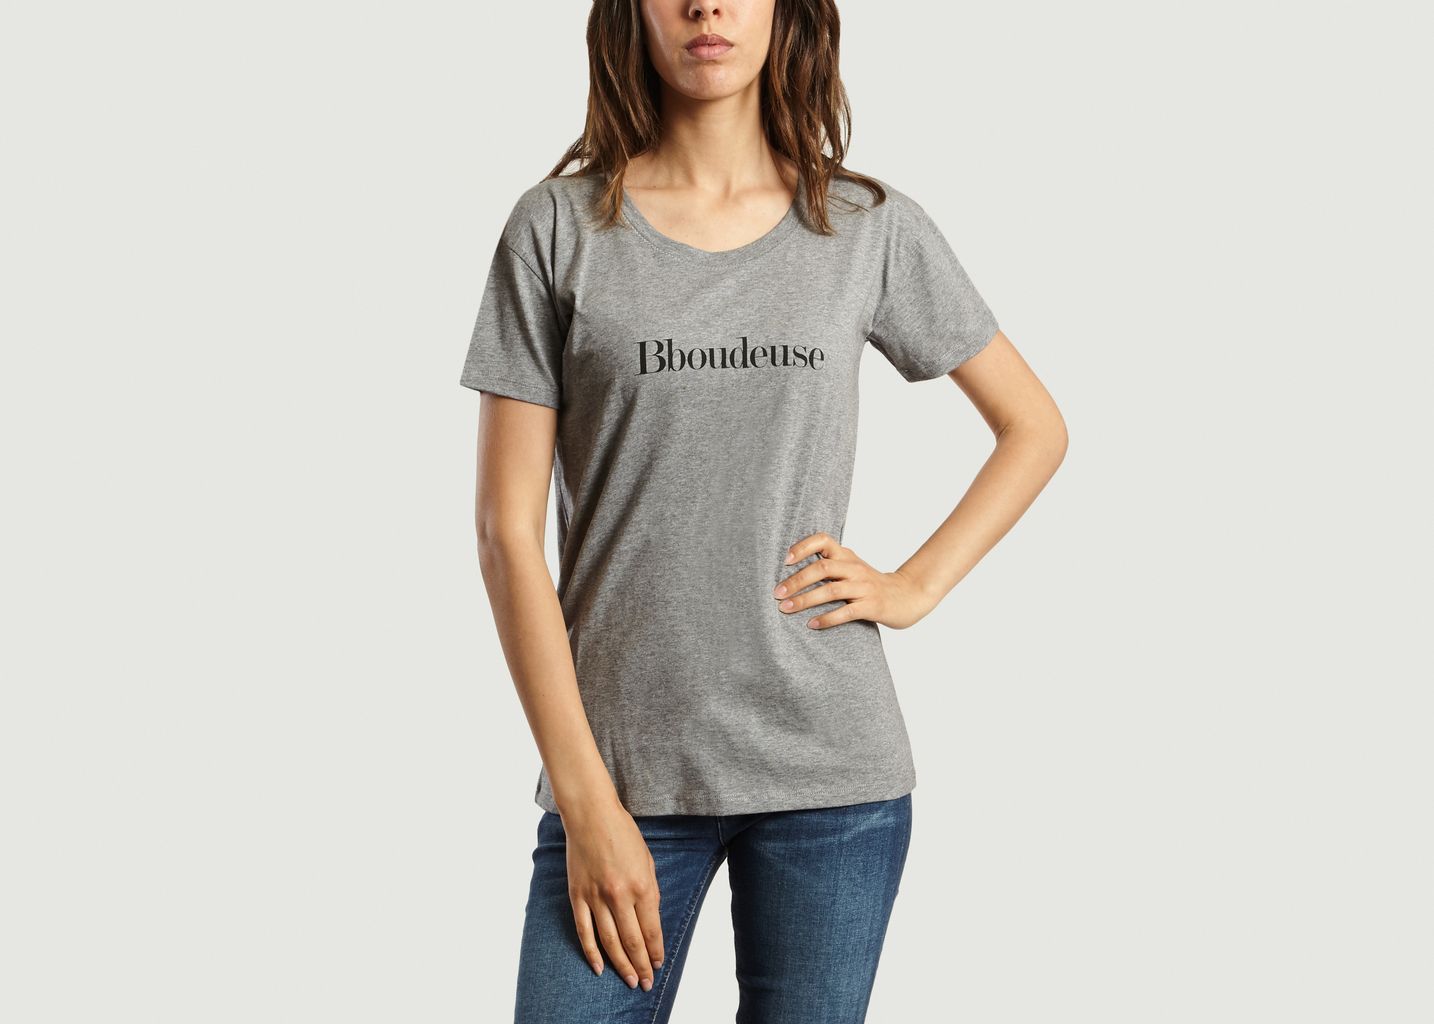 T-Shirt Boudeuse - Vanessa Bruno